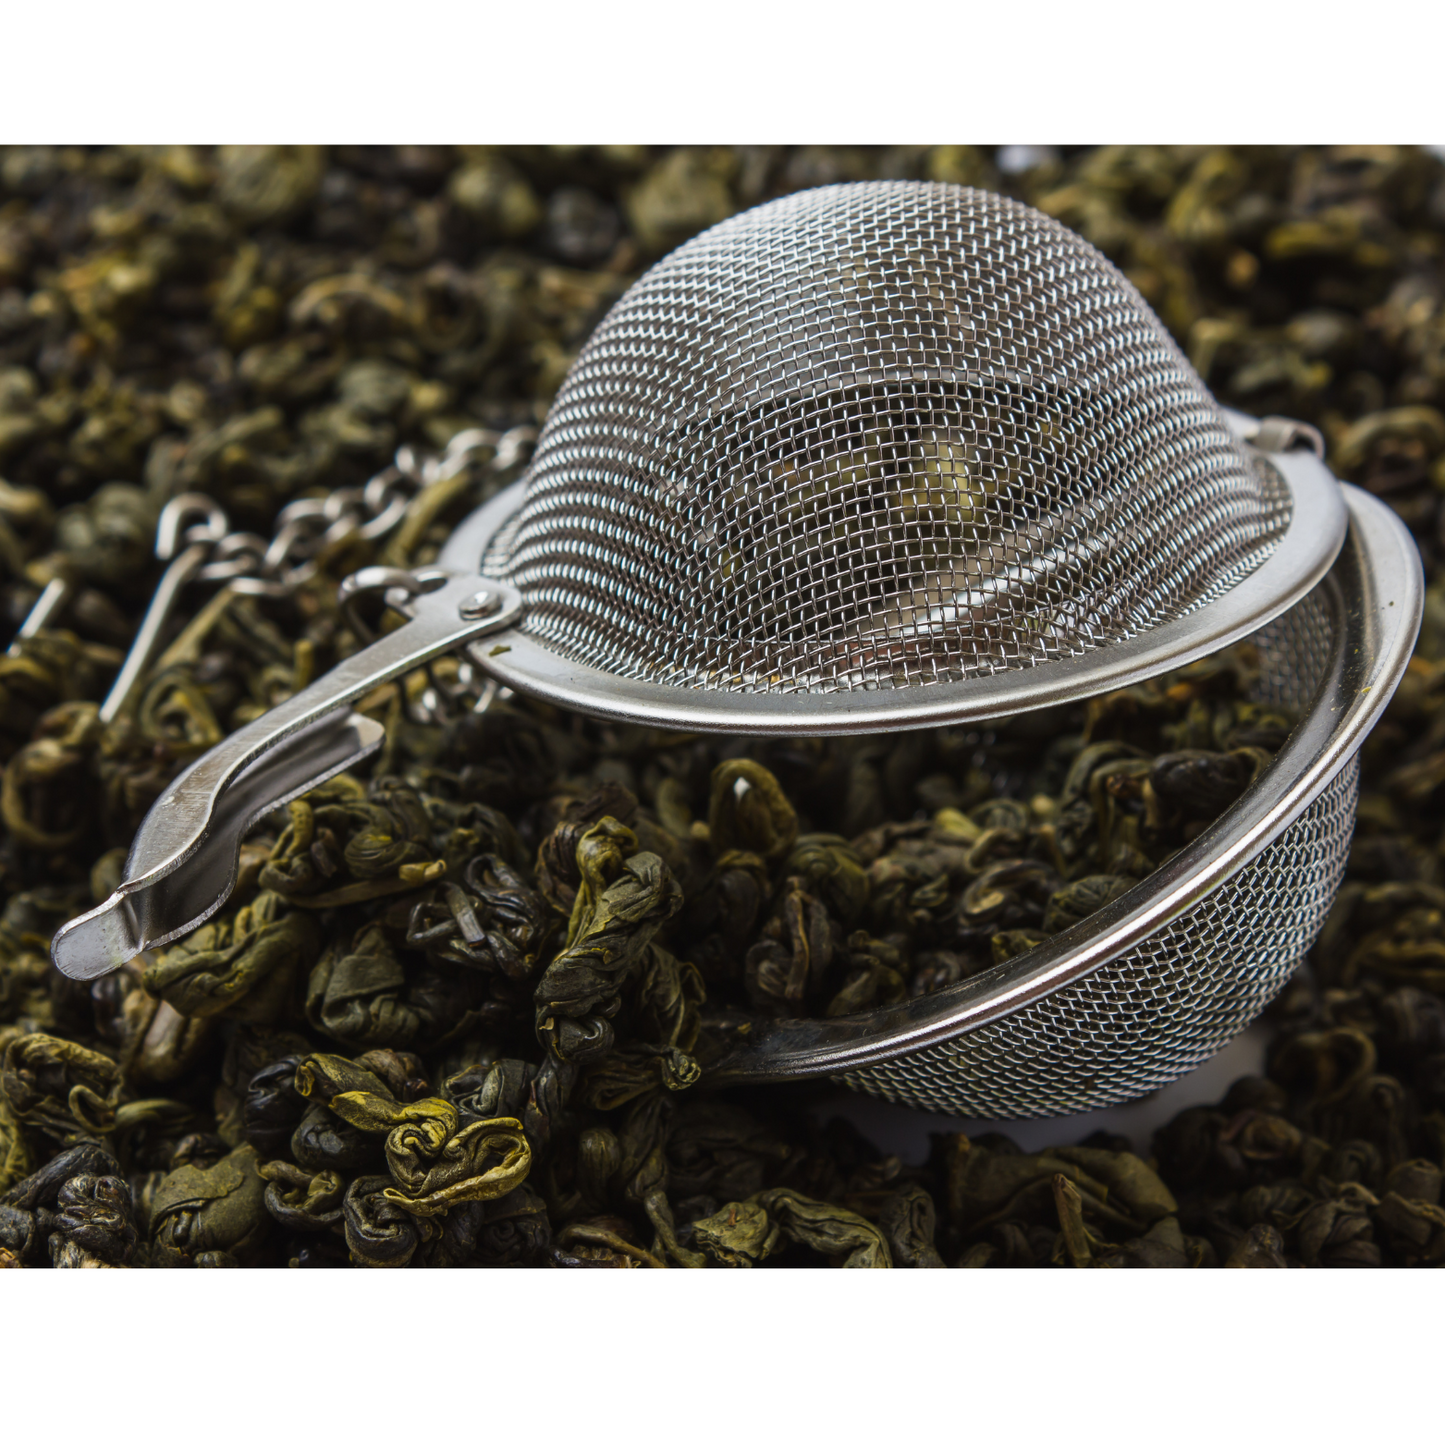 Tea Infuser Mesh Ball for Brewing Loose Leaf Tea 2."